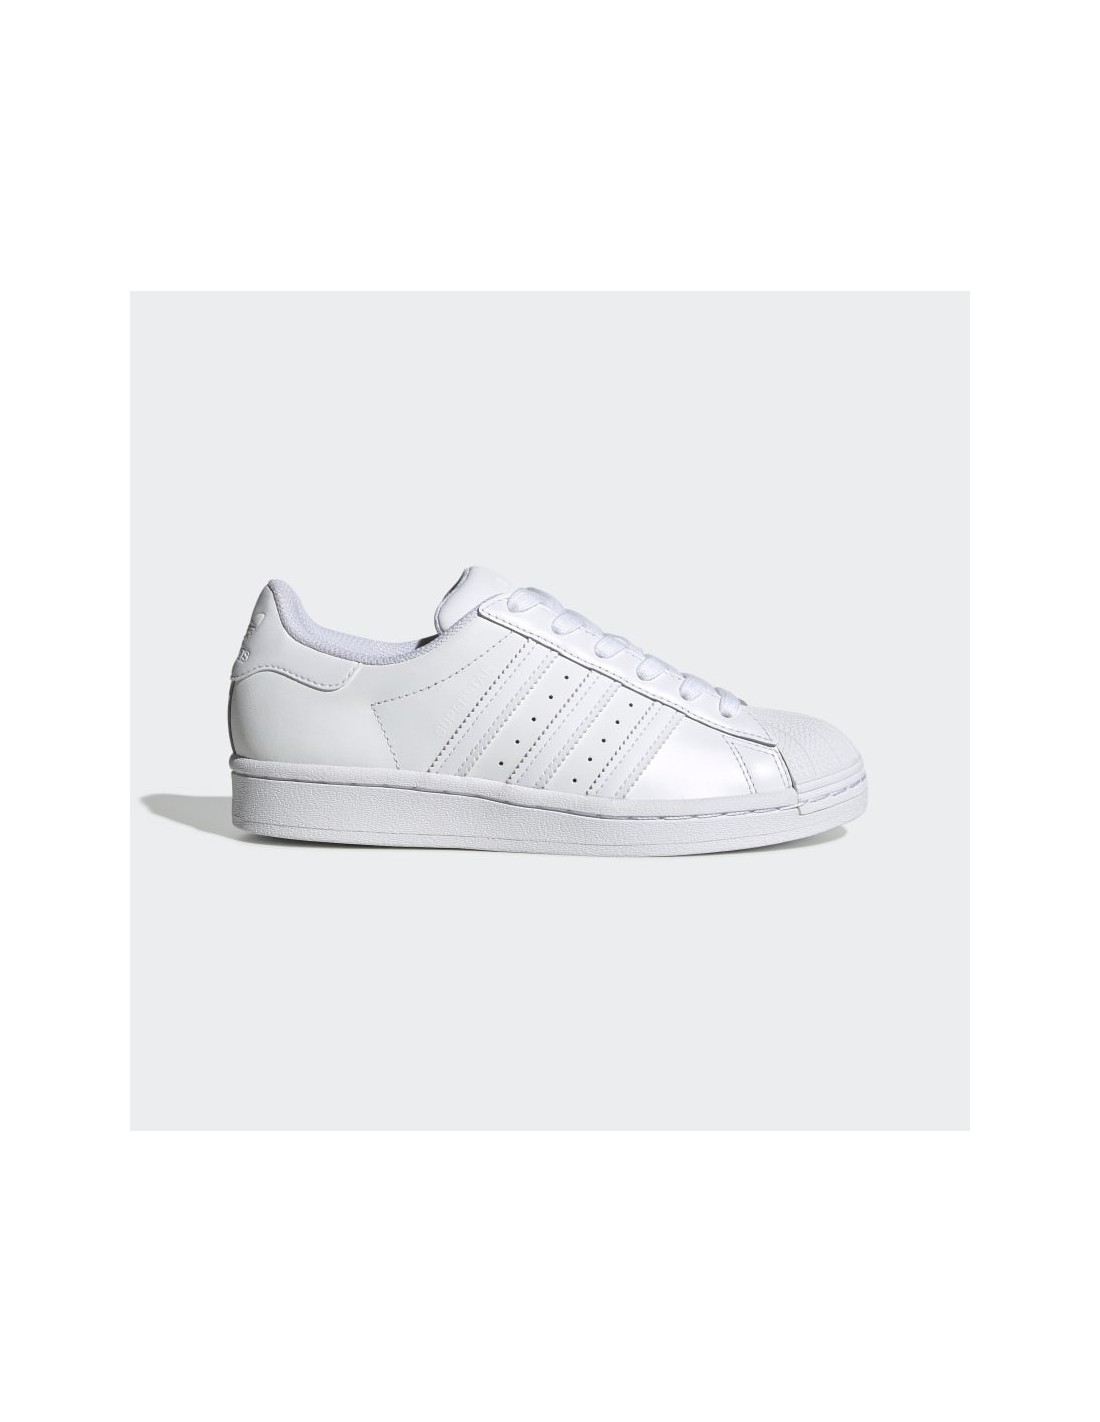 adidas Superstar Ftwr White Core (C77124)